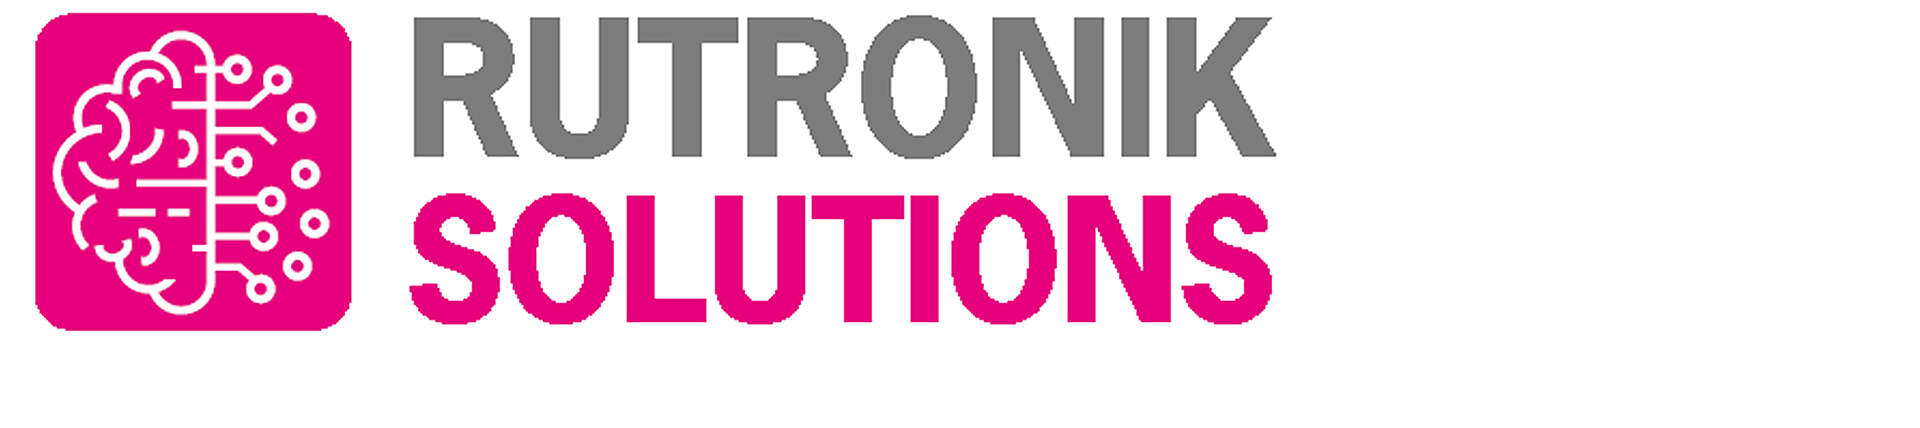 Rutronik SOLUTIONS Logo